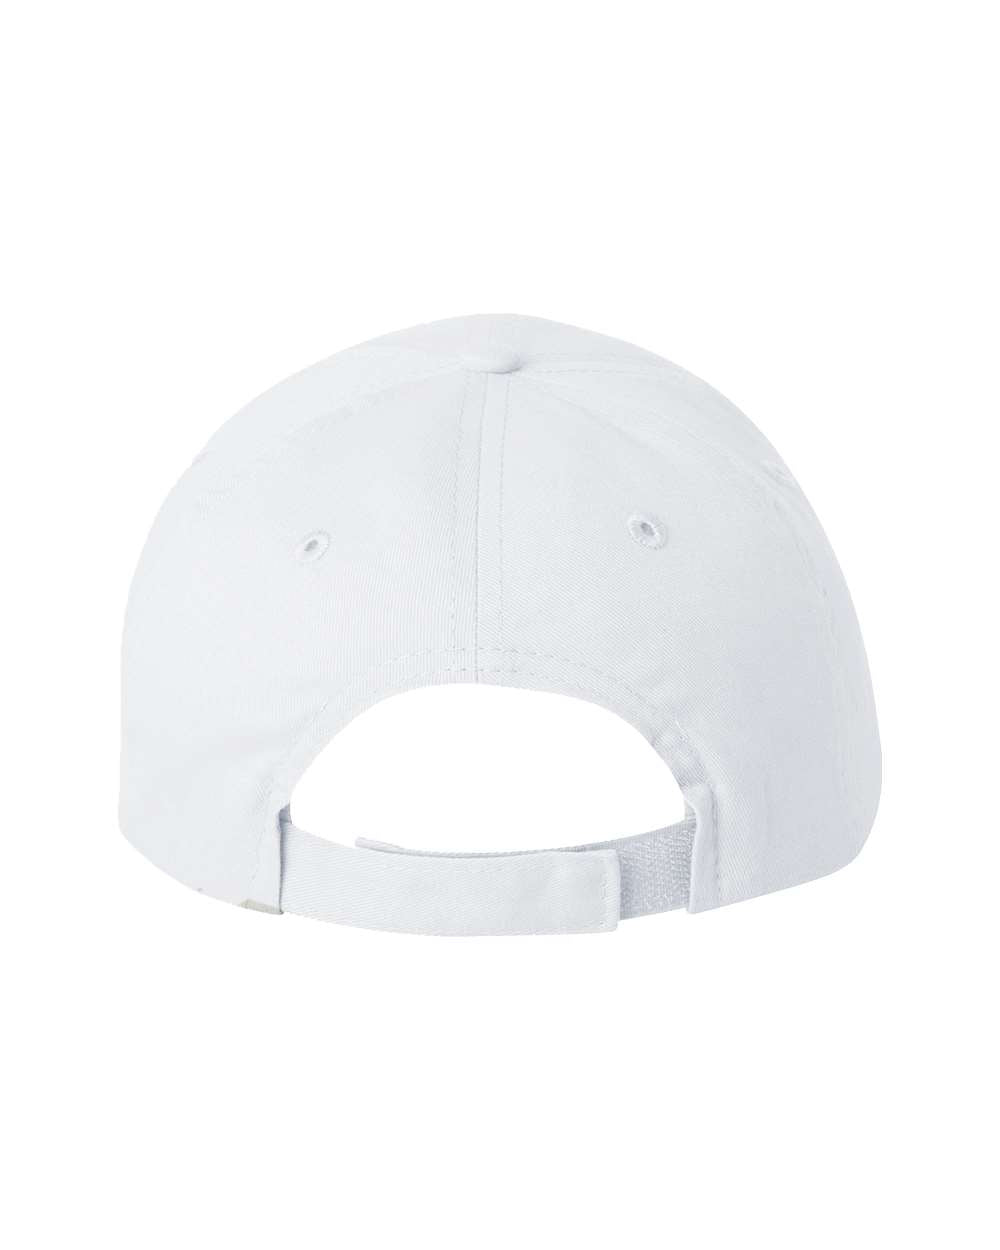 valucap brushed twill cap back white